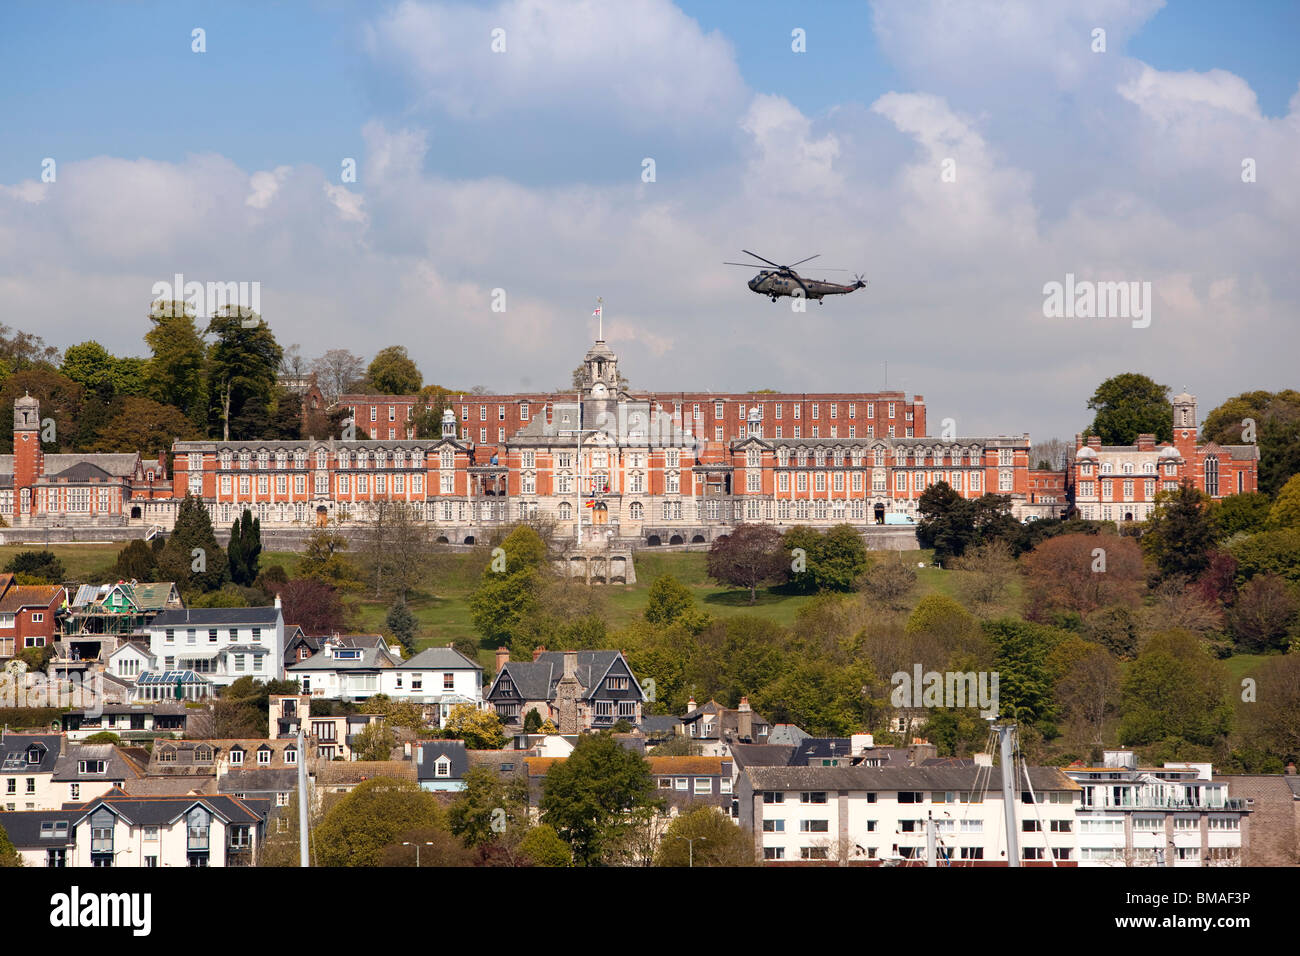 UK, England, Devon, Dartmouth, Westland WS-61 Sea King helicopter flying over Britannia Royal Naval College Stock Photo